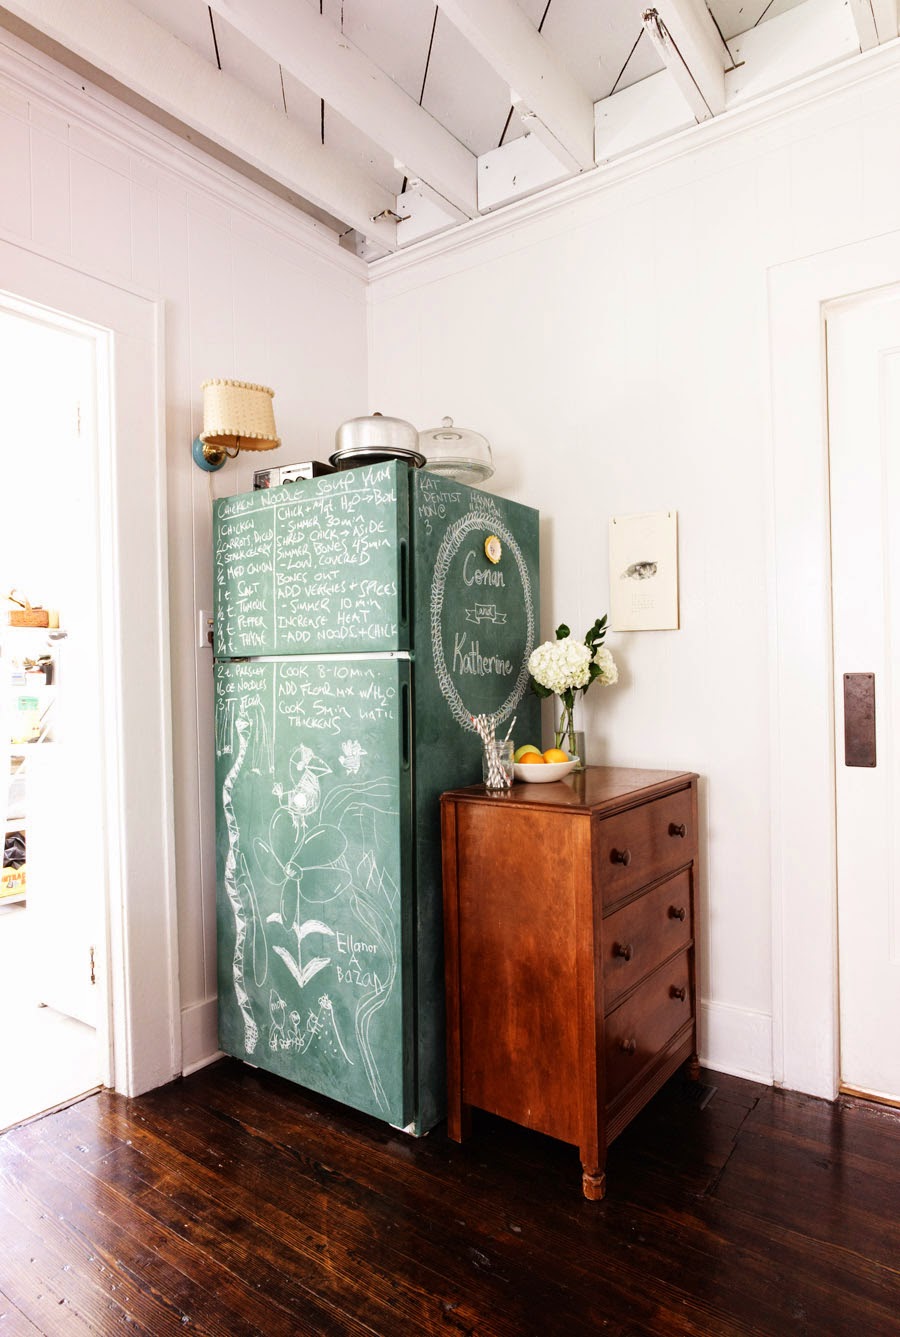 Before & After: Vintage Repainted Refrigerator